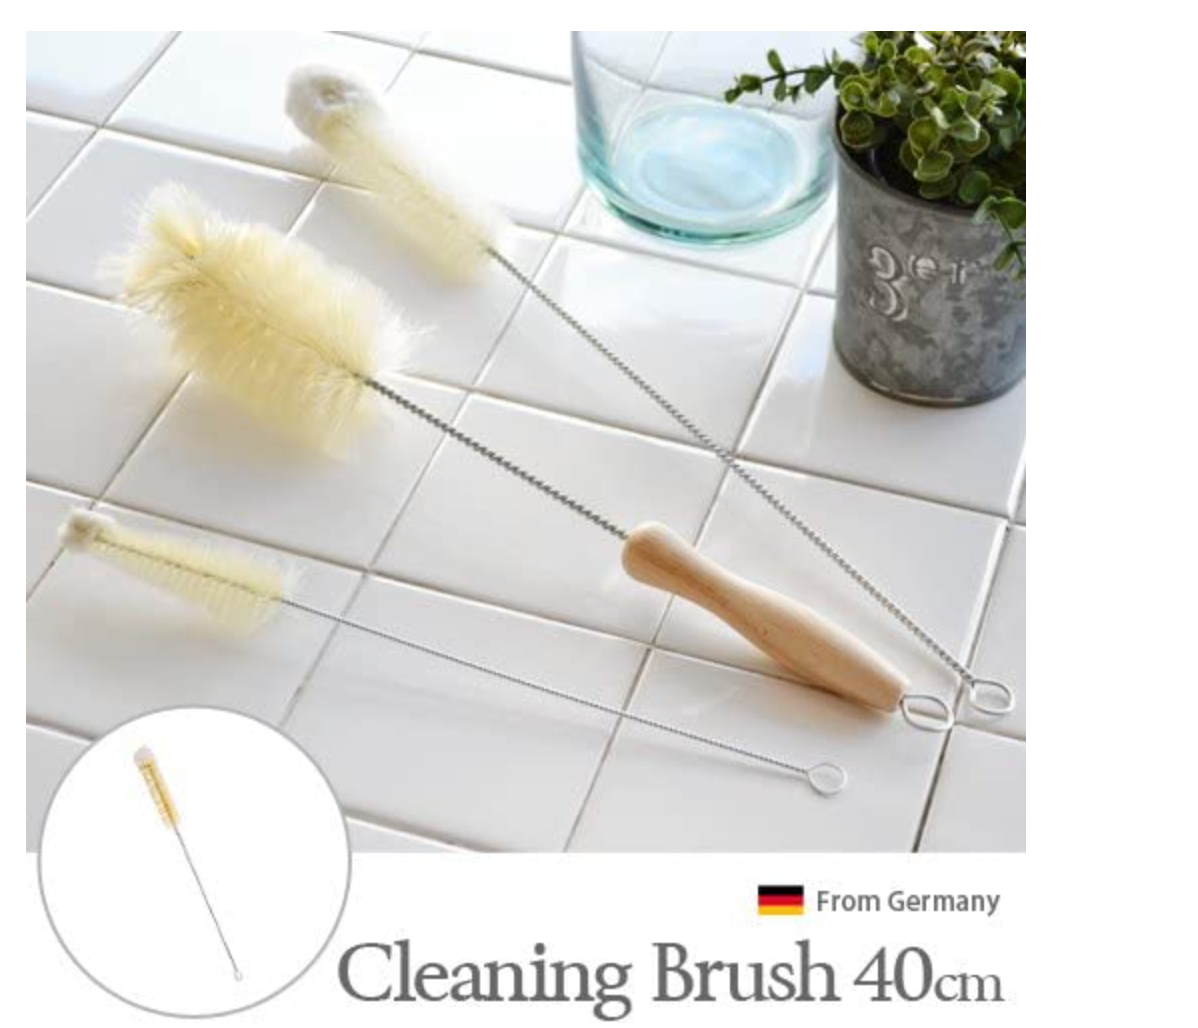 Redecker Cleaning Brush 40cm